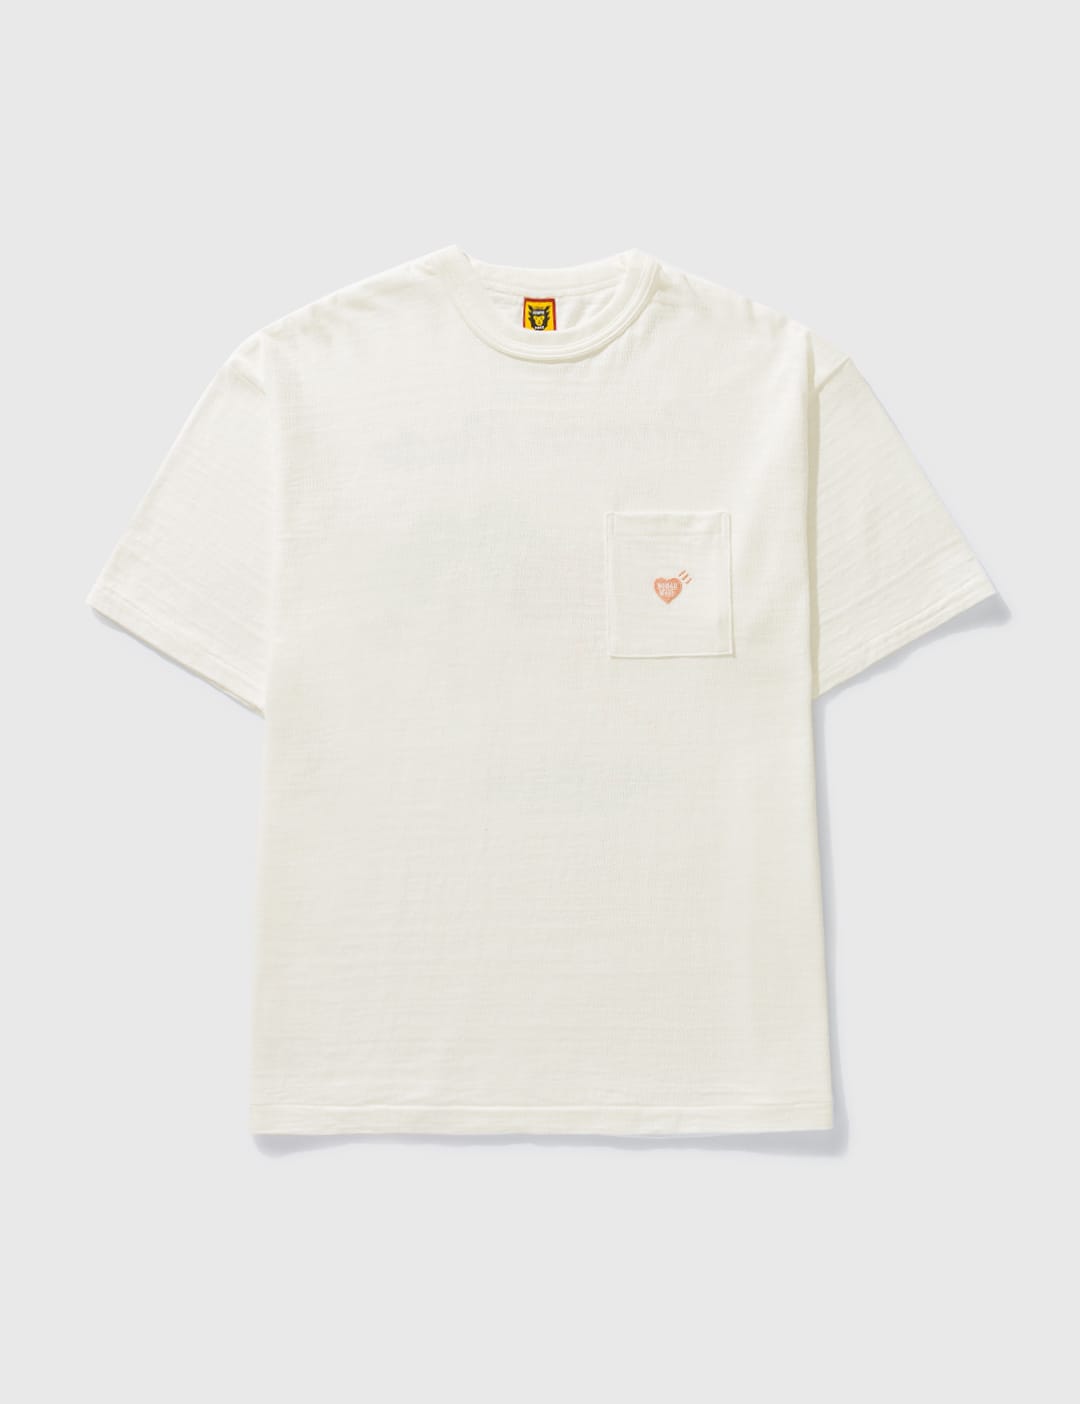 HUMAN MADE FLAMINGO T-SHIRT  Tシャツ Tシャツ/カットソー(半袖/袖なし) 早割クーポン